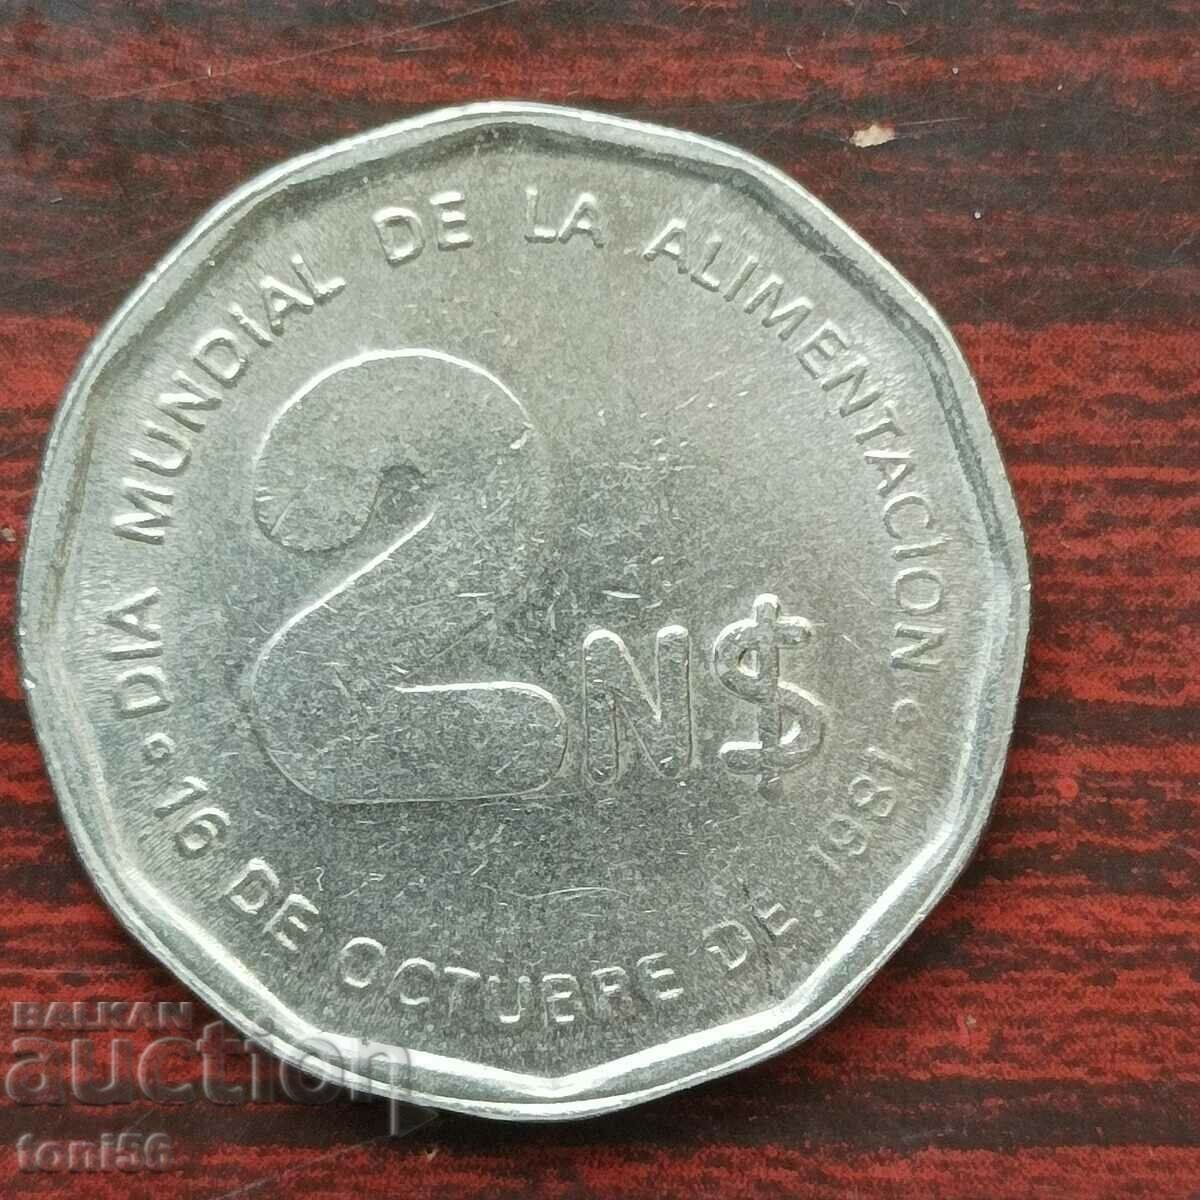 Uruguay 2 pesos noi 1981 FAO UNC